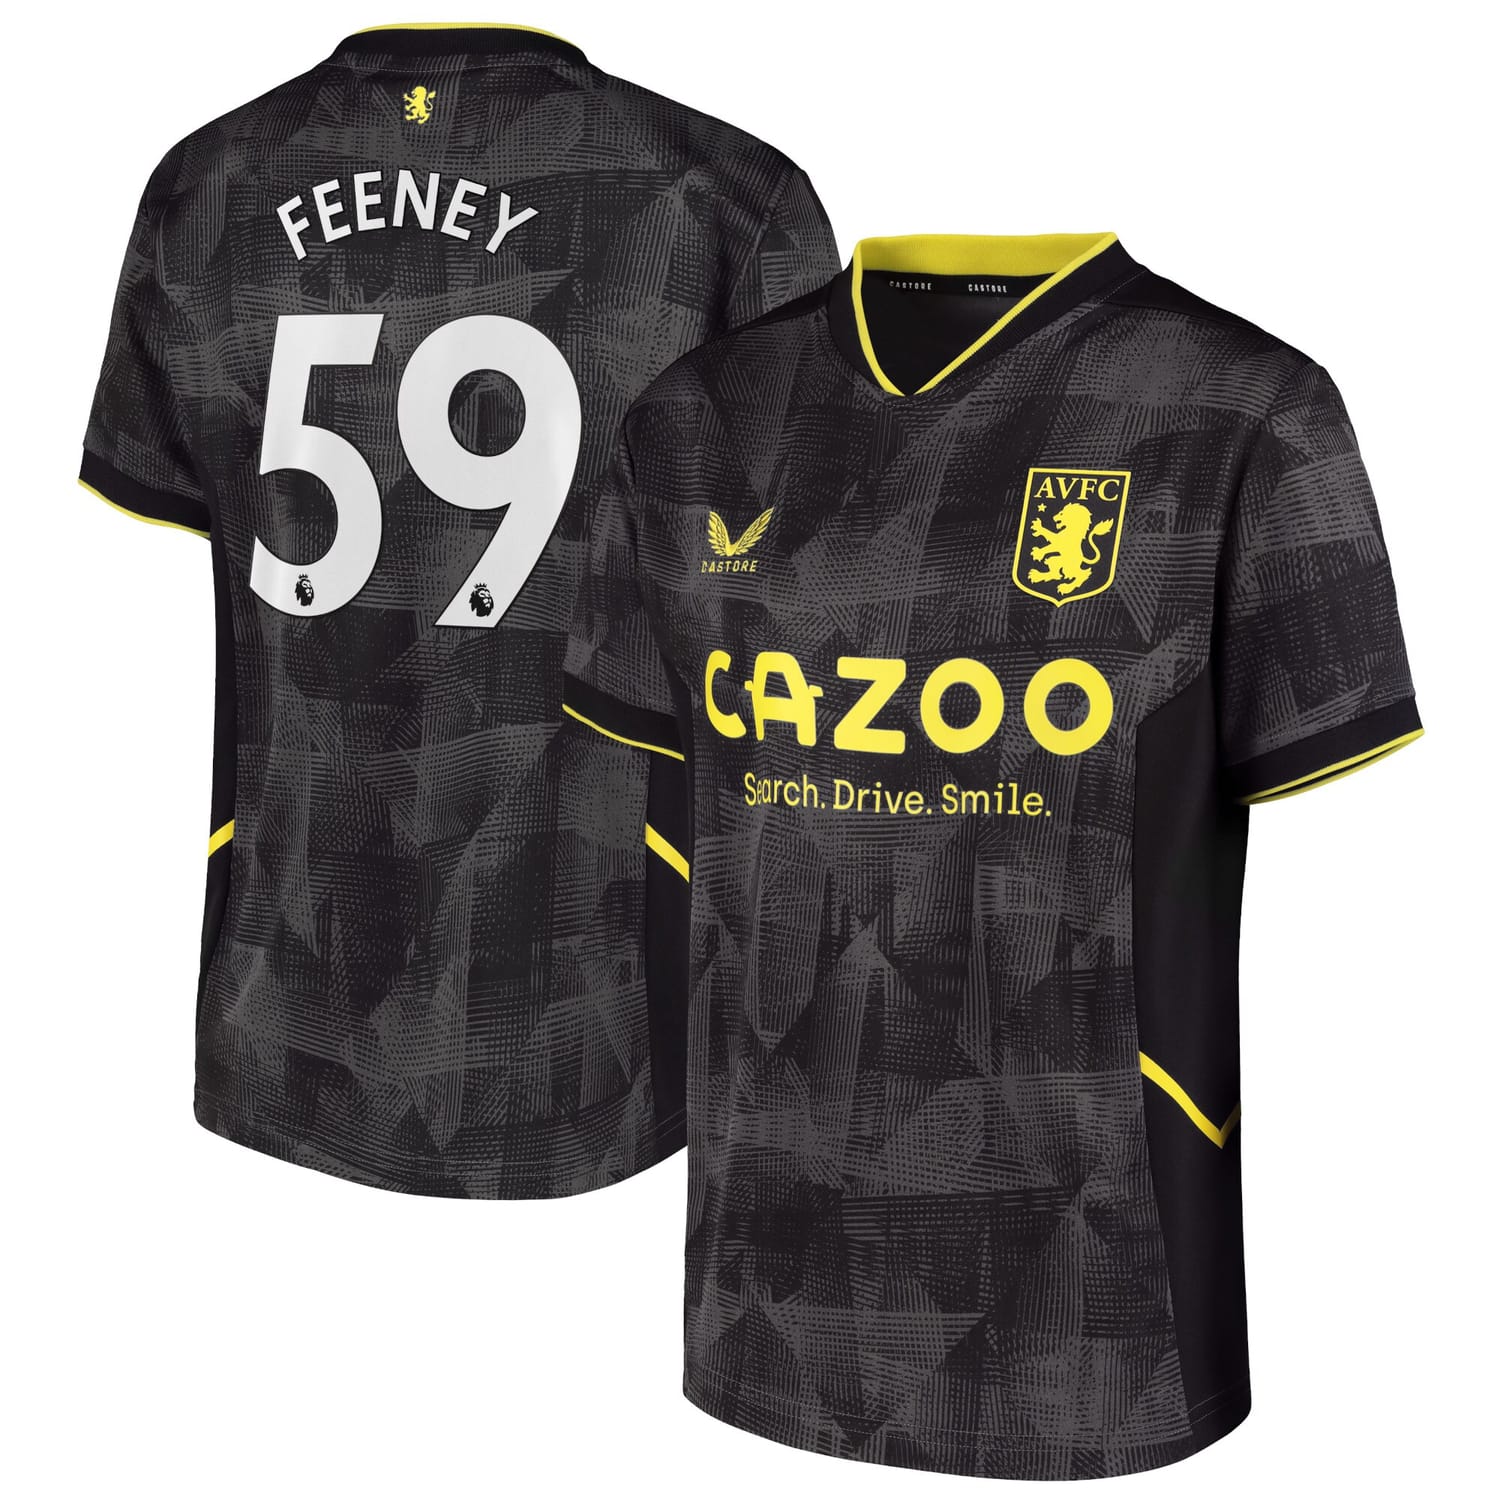 Premier League Aston Villa Third Jersey Shirt 2022-23 player Joshua Feeney 59 printing for Men